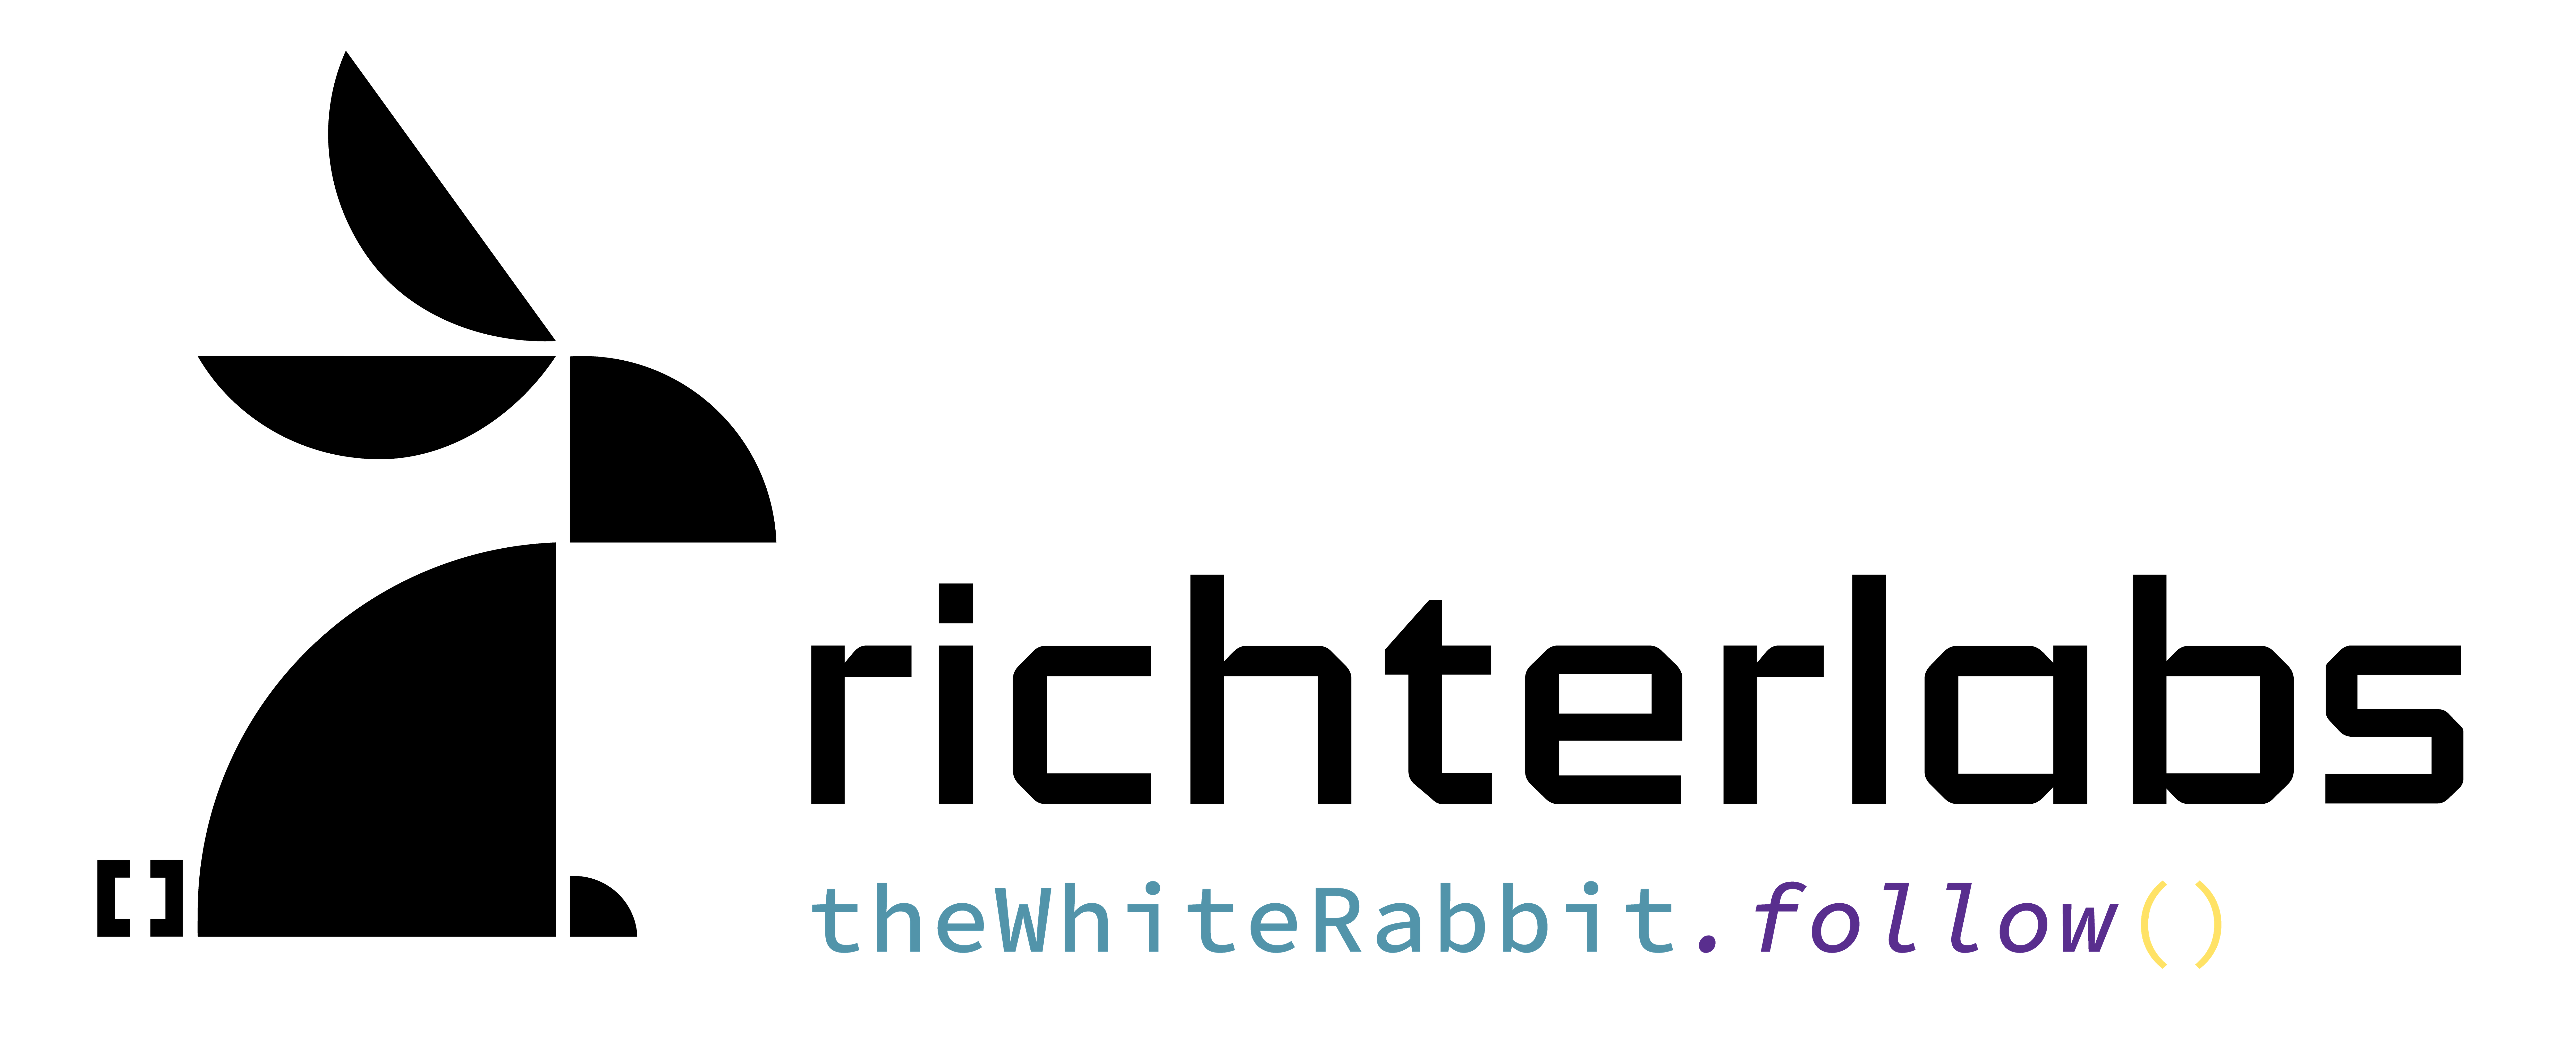 logo for richterlabs softwared development agency